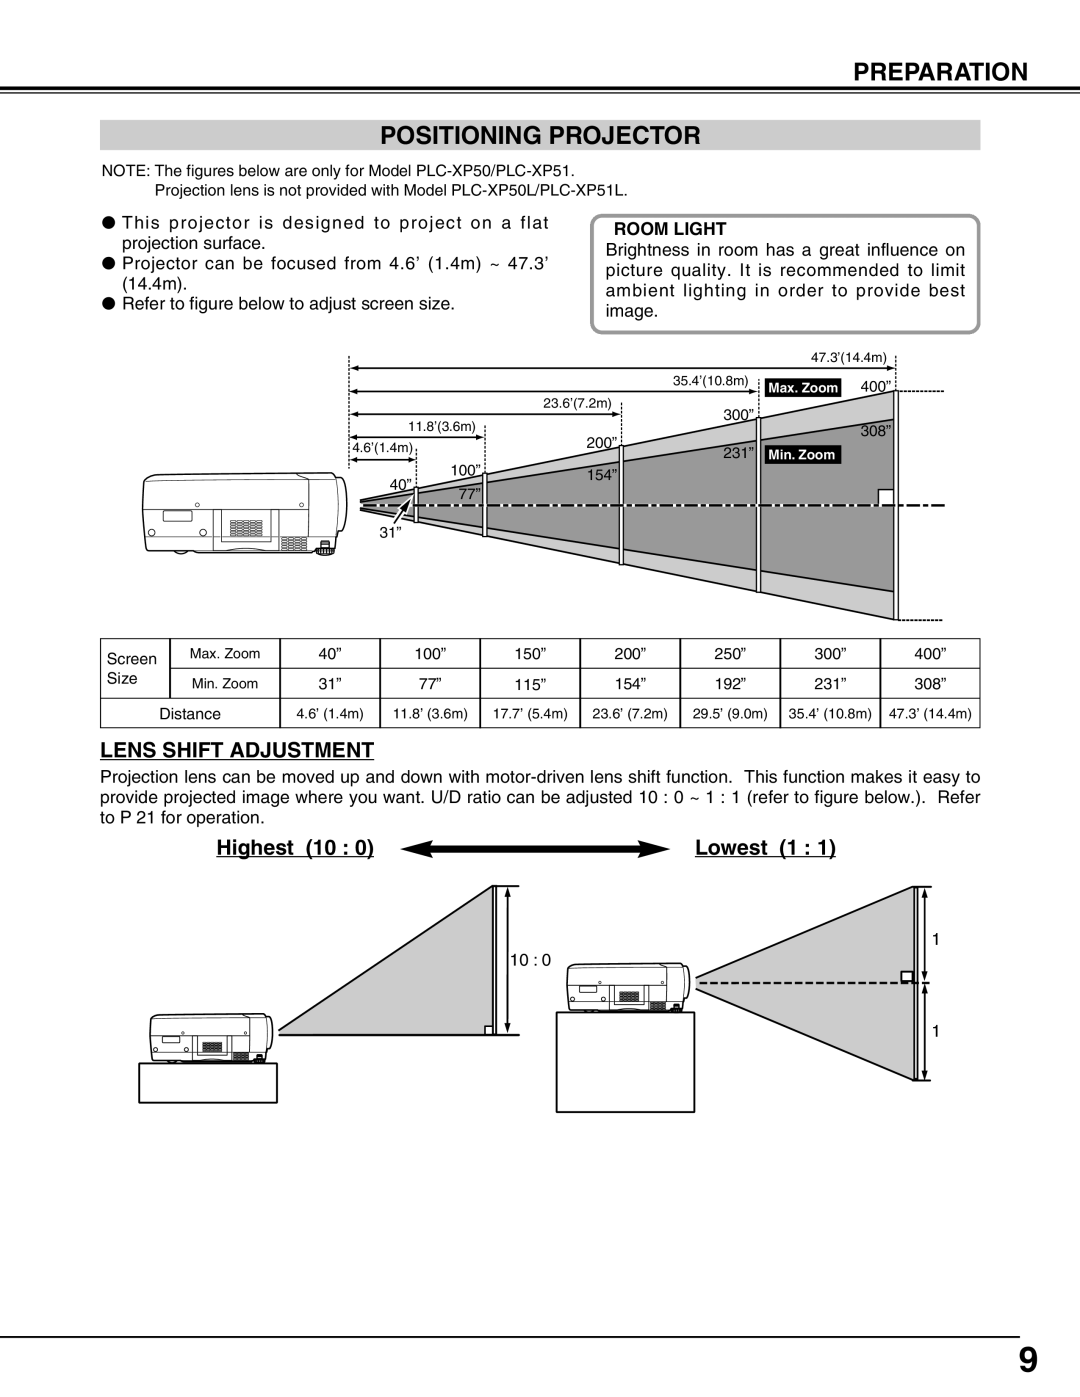 Sanyo PLC-XP50L, XP51L owner manual Preparation Positioning Projector, Lens Shift Adjustment, Highest 10, Lowest 1 